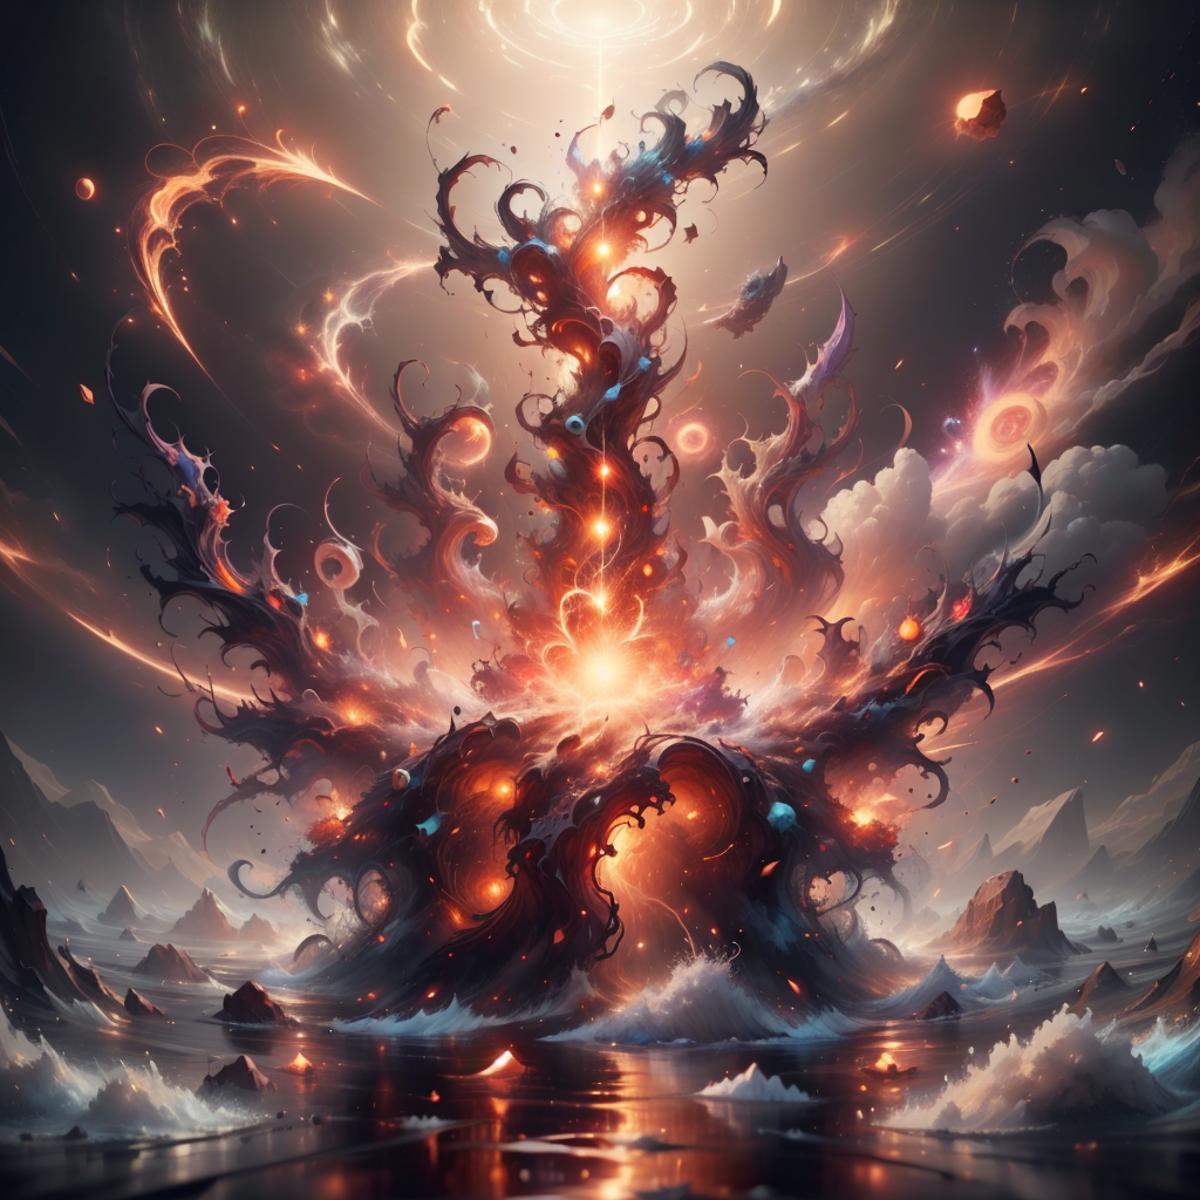 Explosion magic - Grimoire image by navimixu